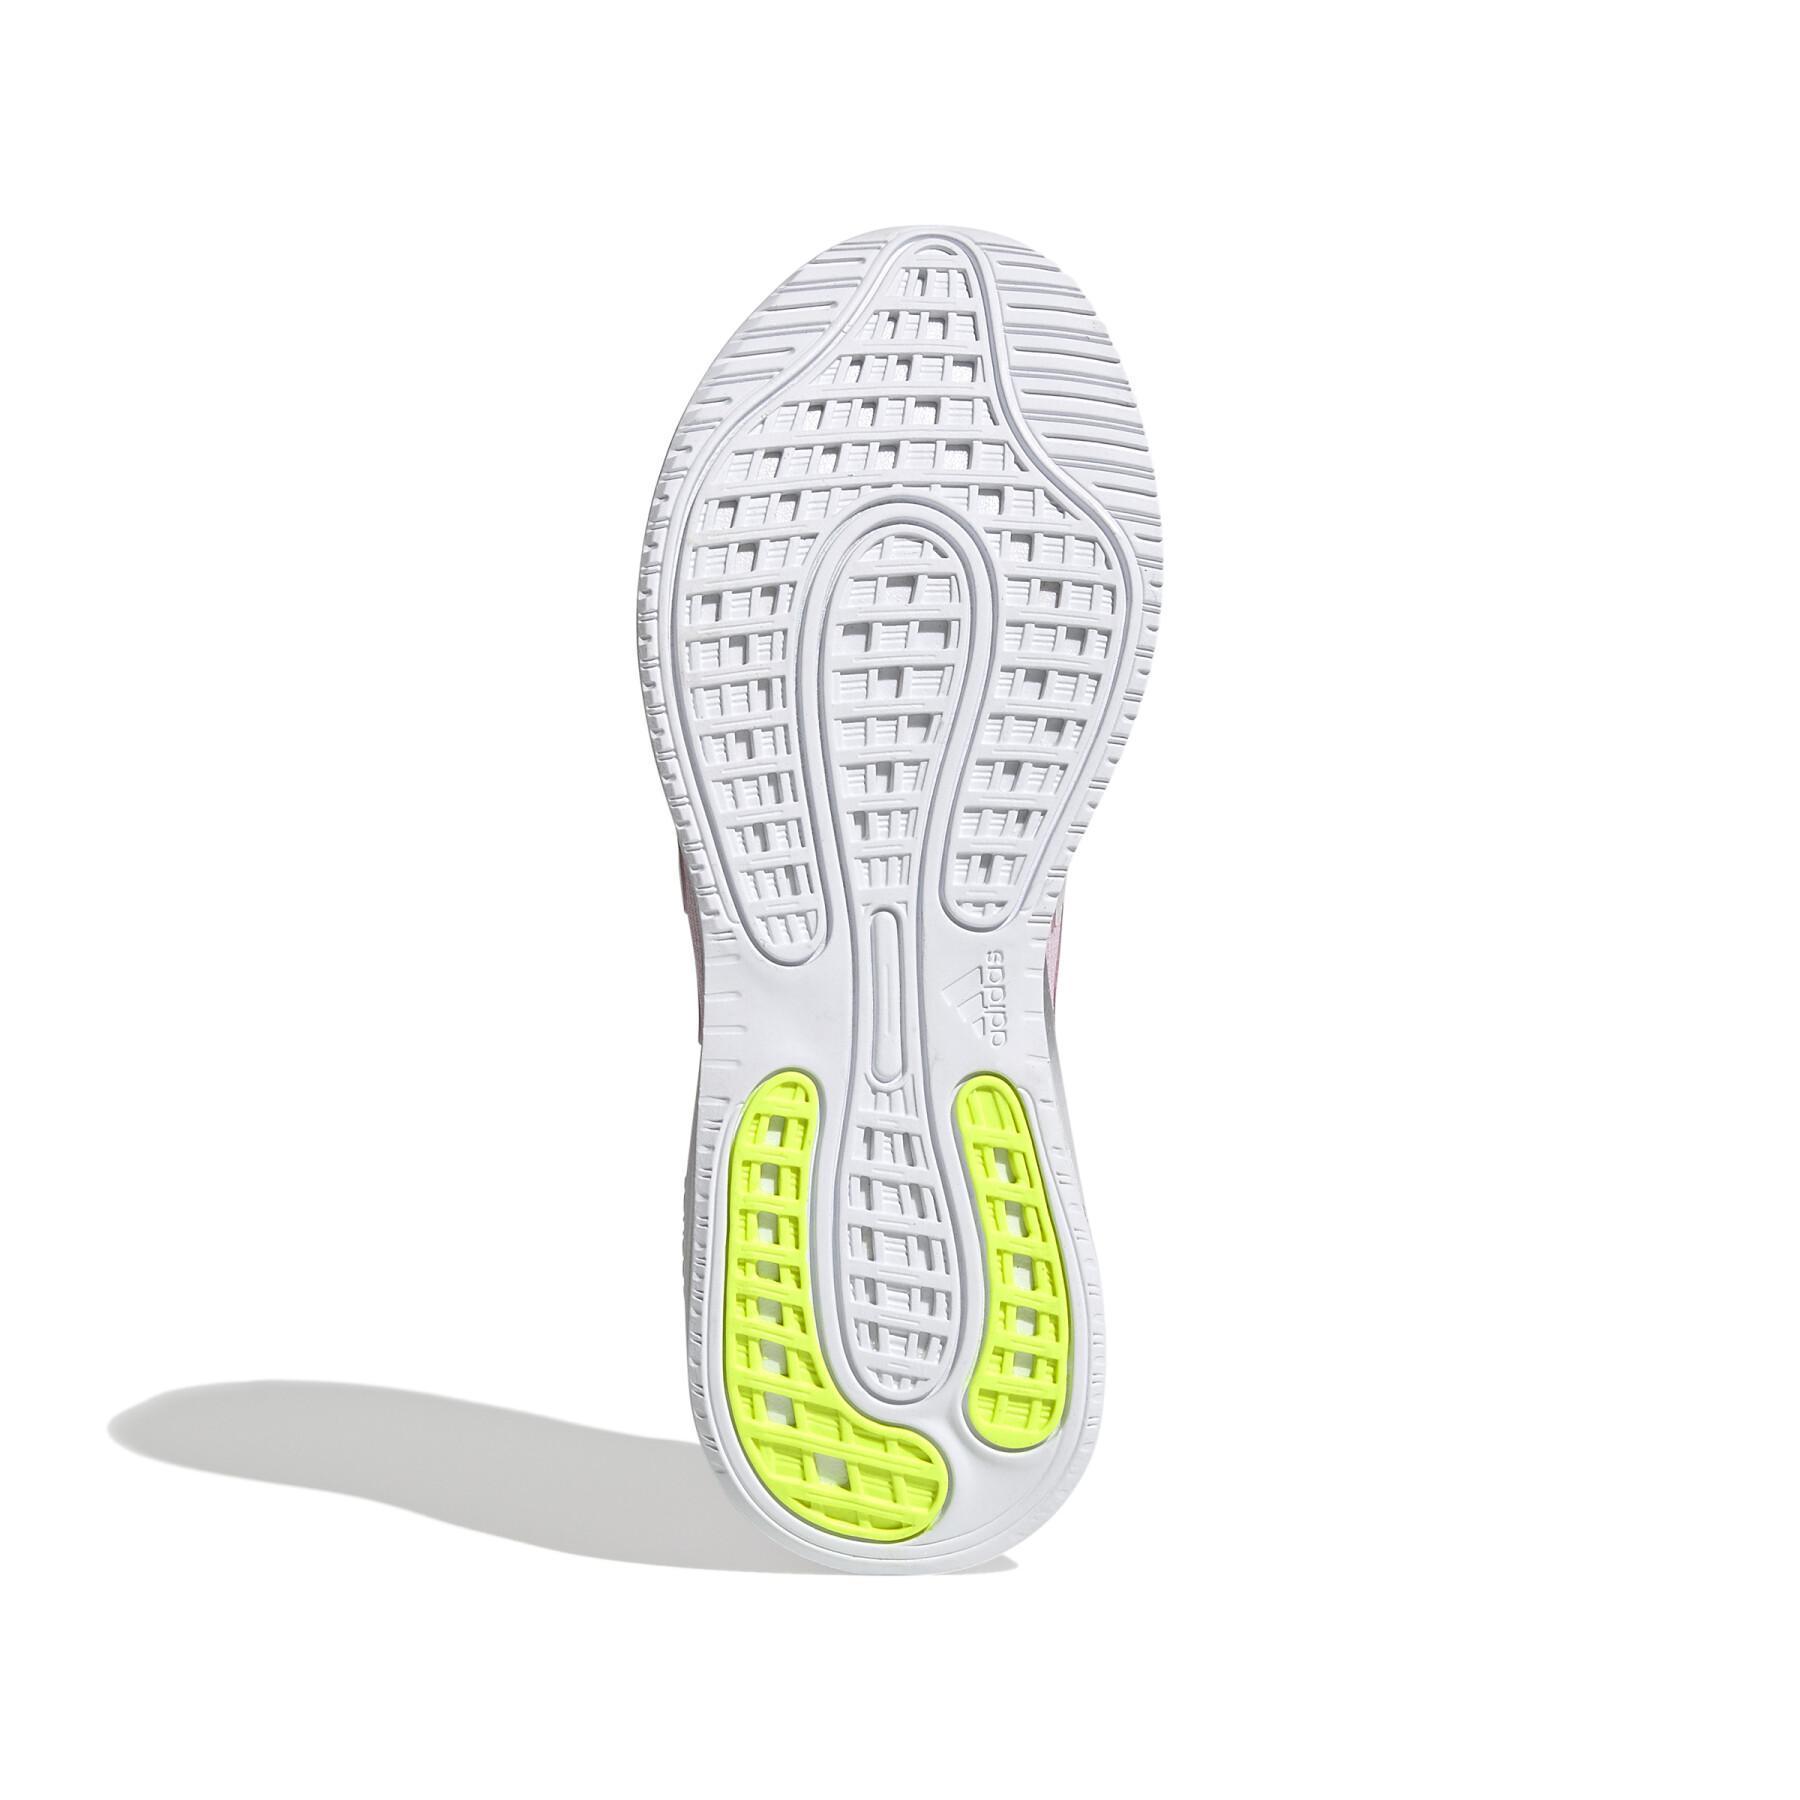 Zapatillas de running para mujer adidas Galaxar Run